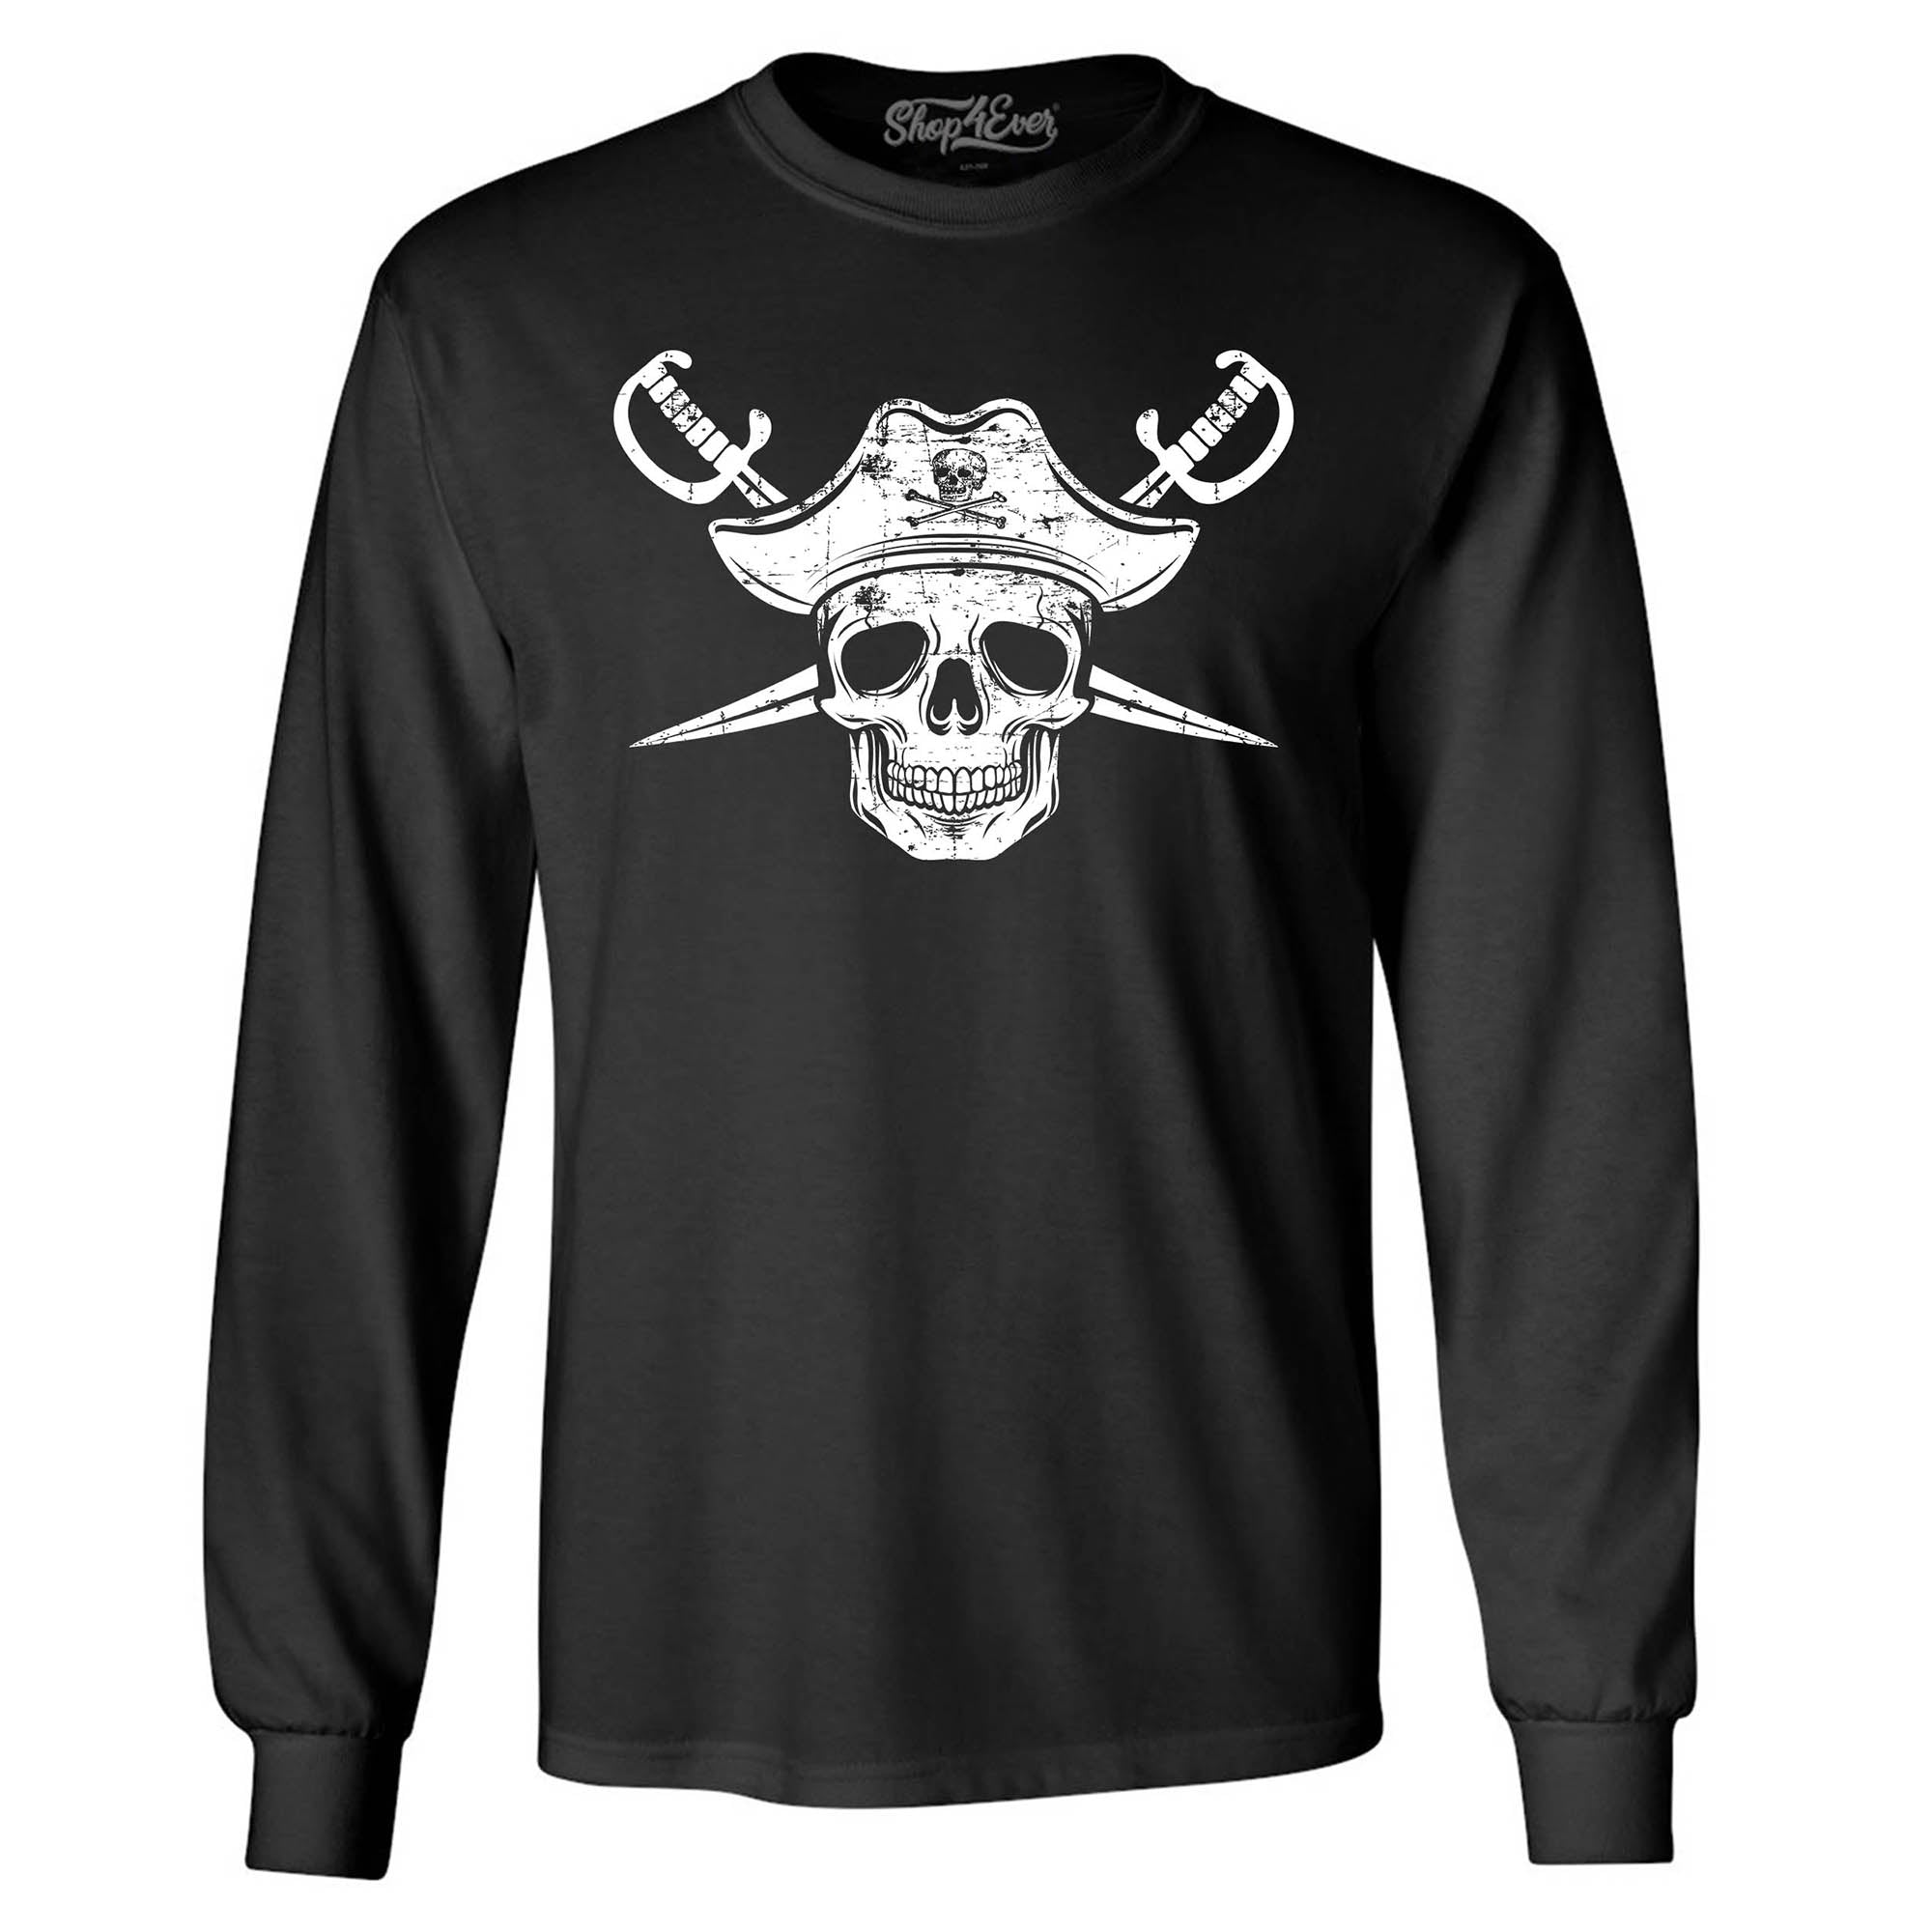 White Pirate Captain Skull with Scimitars Long Sleeve Shirt